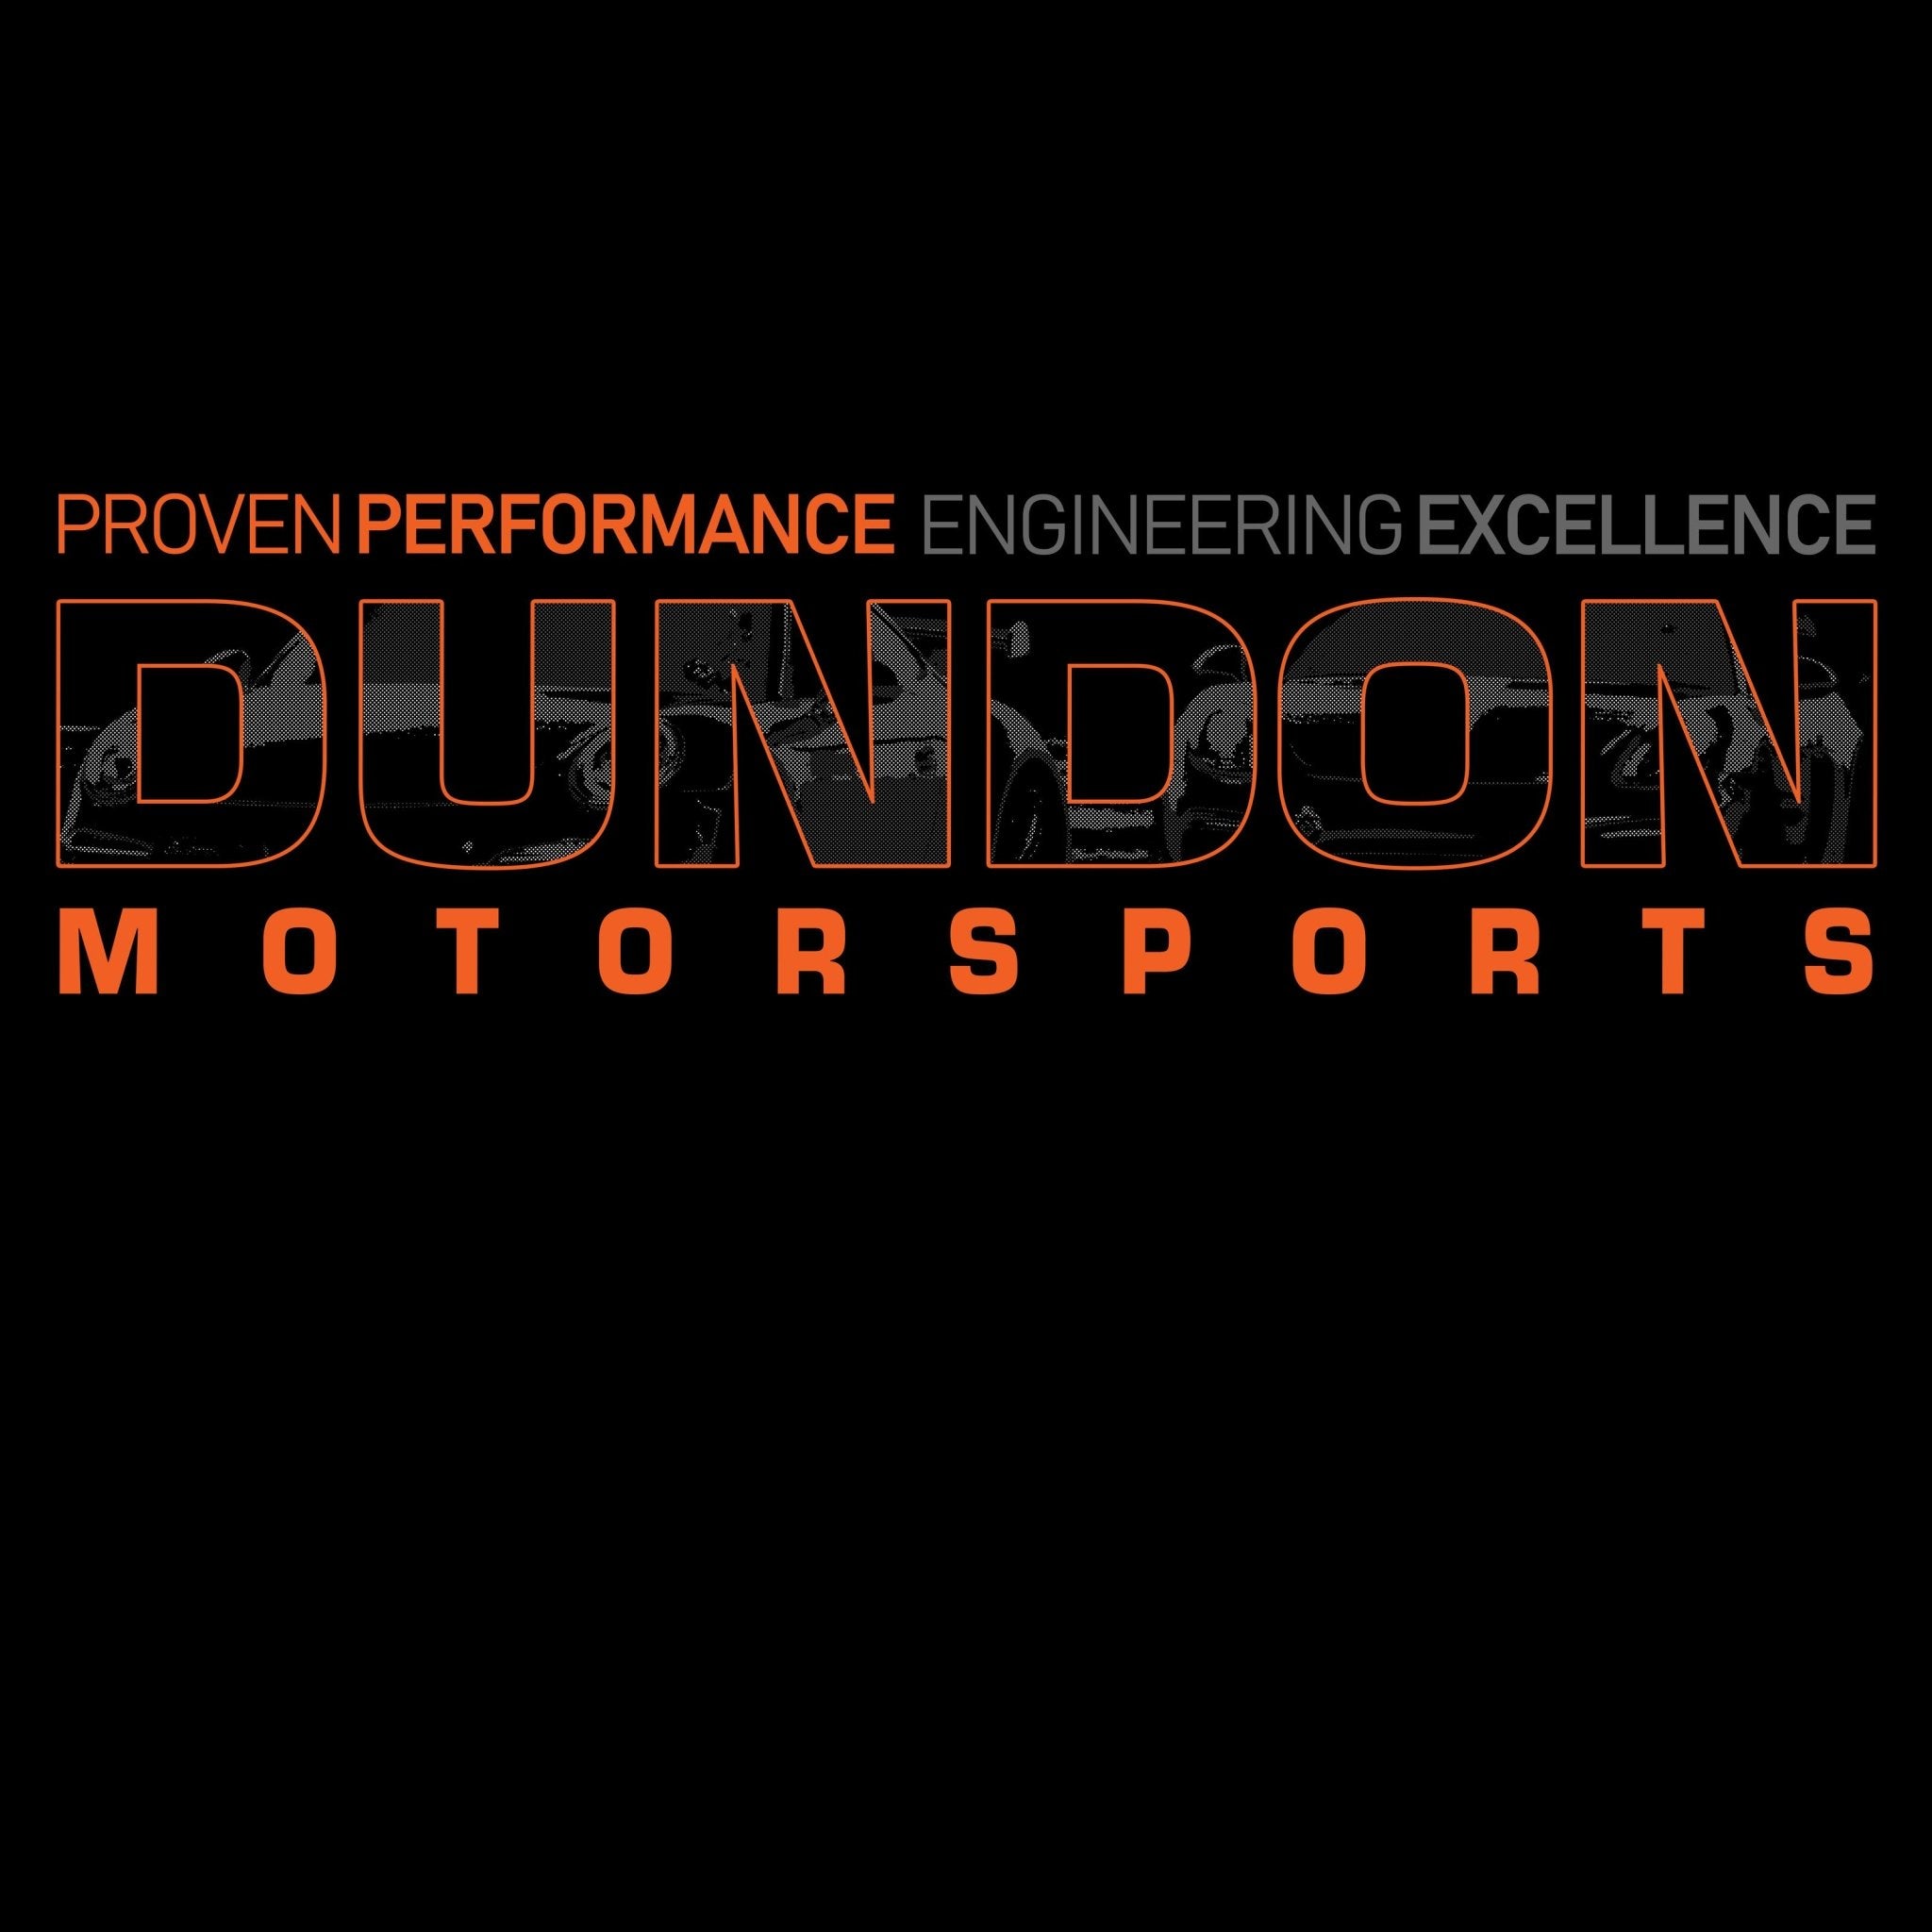 Dundon Motorsports - Engineering Excellence | Proven Performance T-shirt - Dundon Motorsports